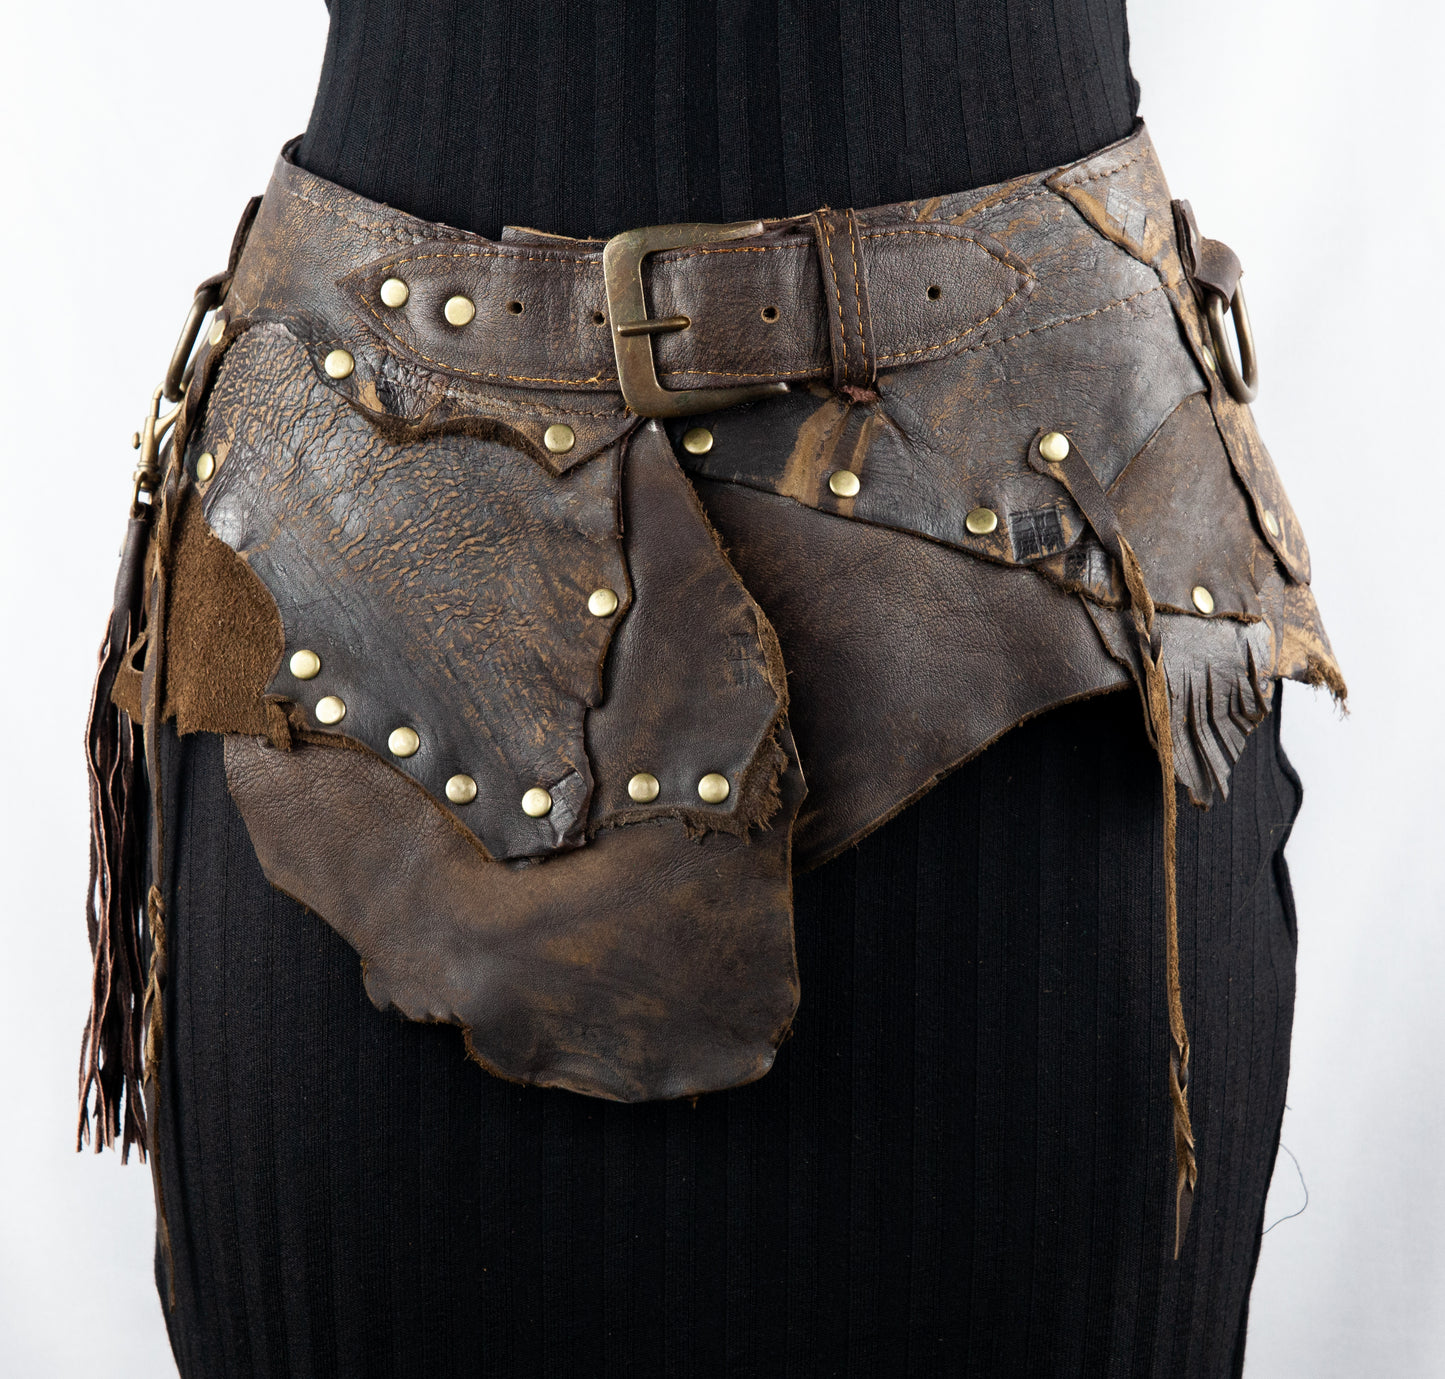 Tribal Boho Dark Leather Skirt with Belt